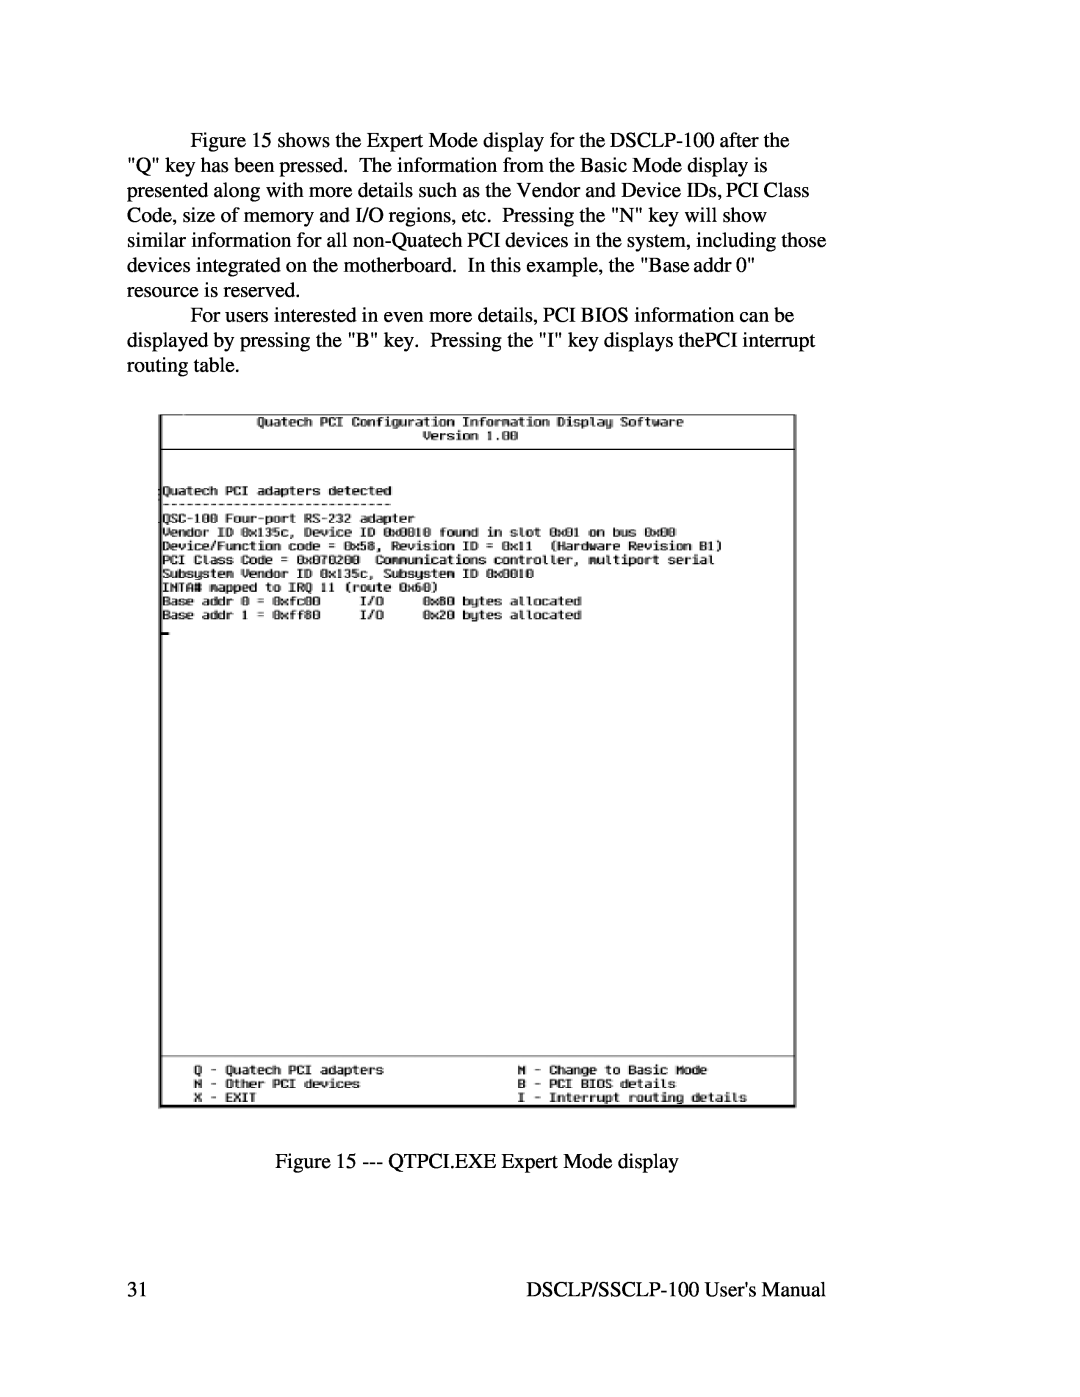 Quatech user manual QTPCI.EXE Expert Mode display, DSCLP/SSCLP-100 Users Manual 